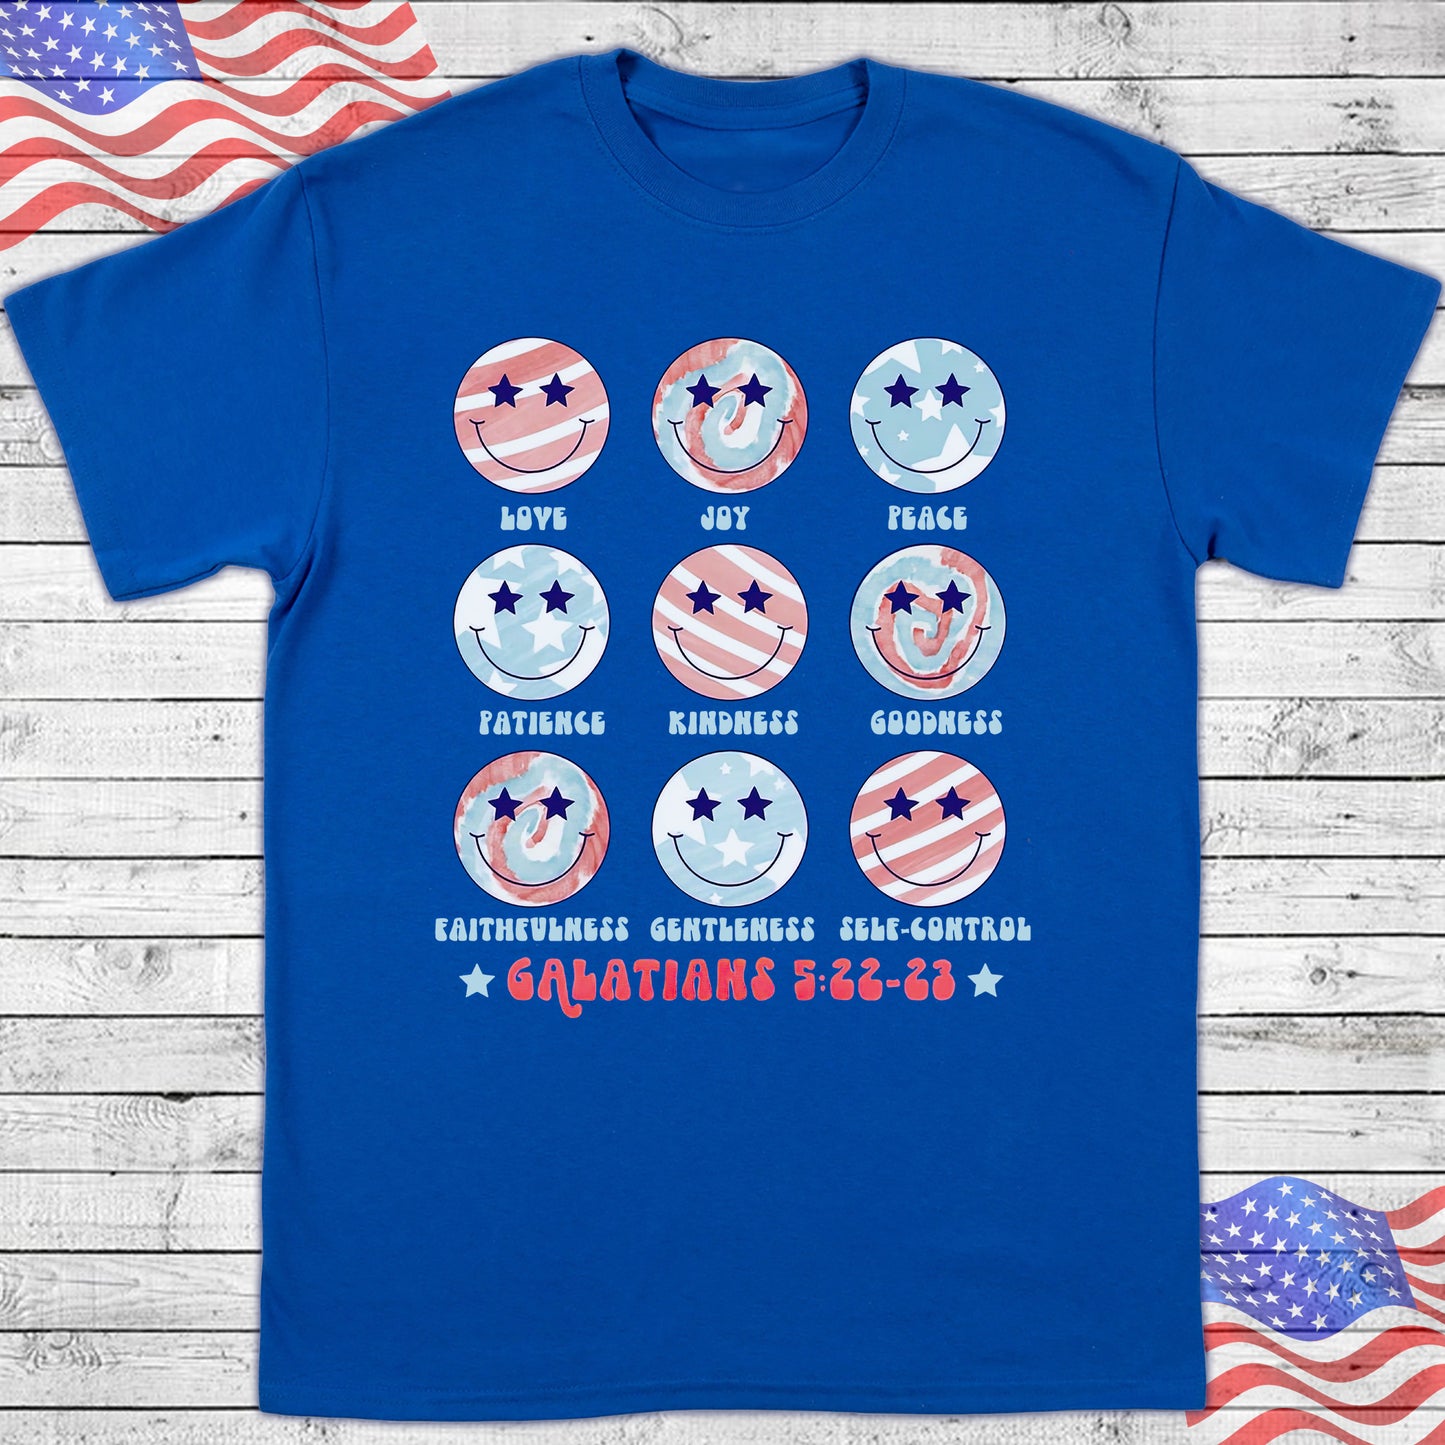 Retro USA Fruit of the Spirit T-shirt - USA Shirt - American Flag - Shirt For Women - Ciaocustom